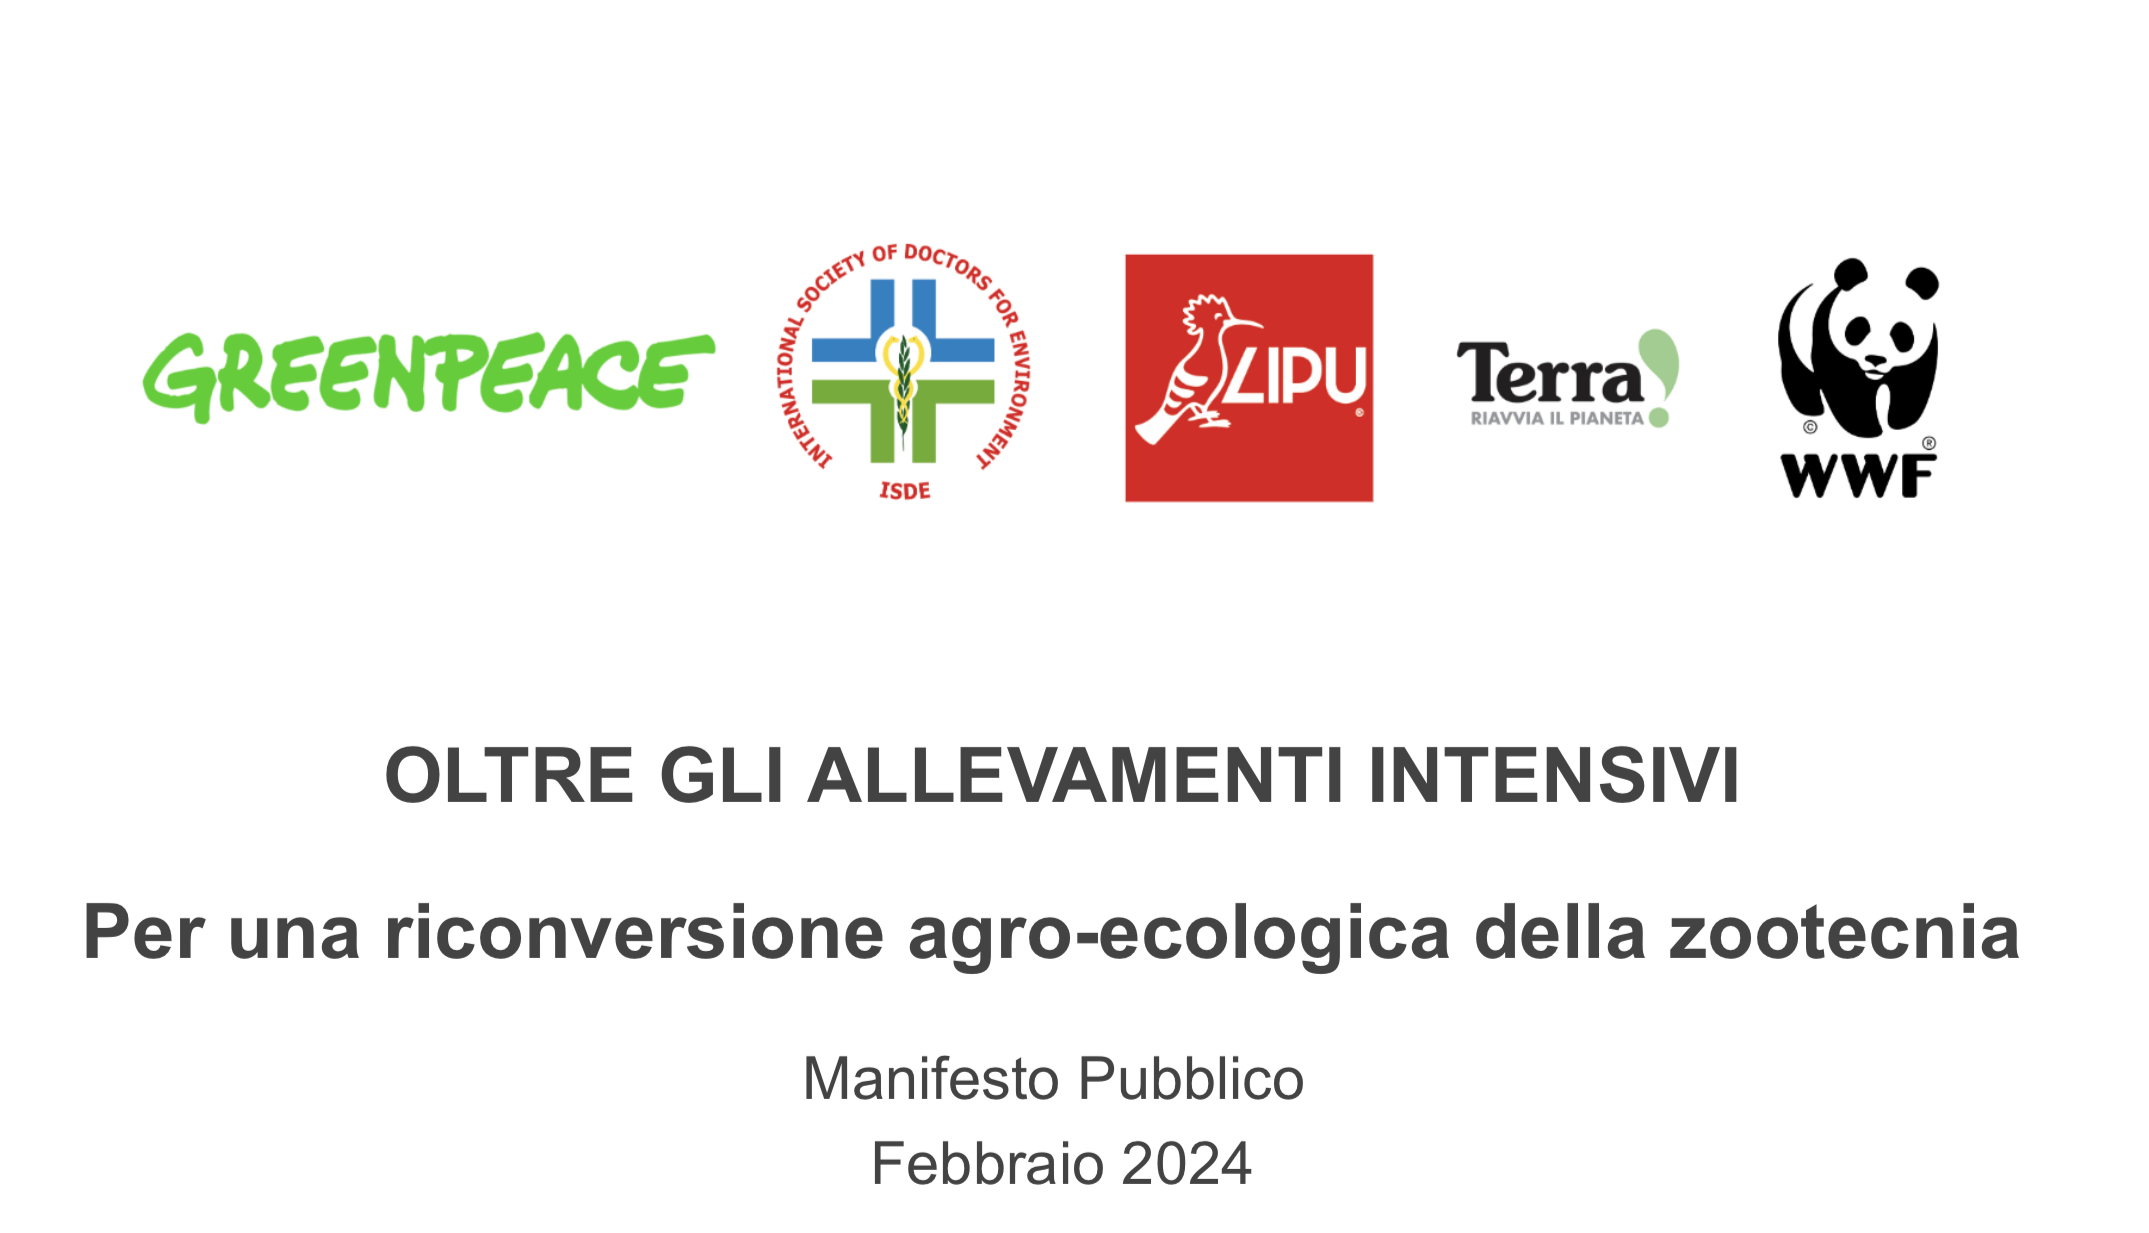 Oltre gli allevamenti intensivi, una proposta di legge presentata oggi in Parlamento da Greenpeace, ISDE-Medici per l’ambiente, Lipu, Terra! e WWF